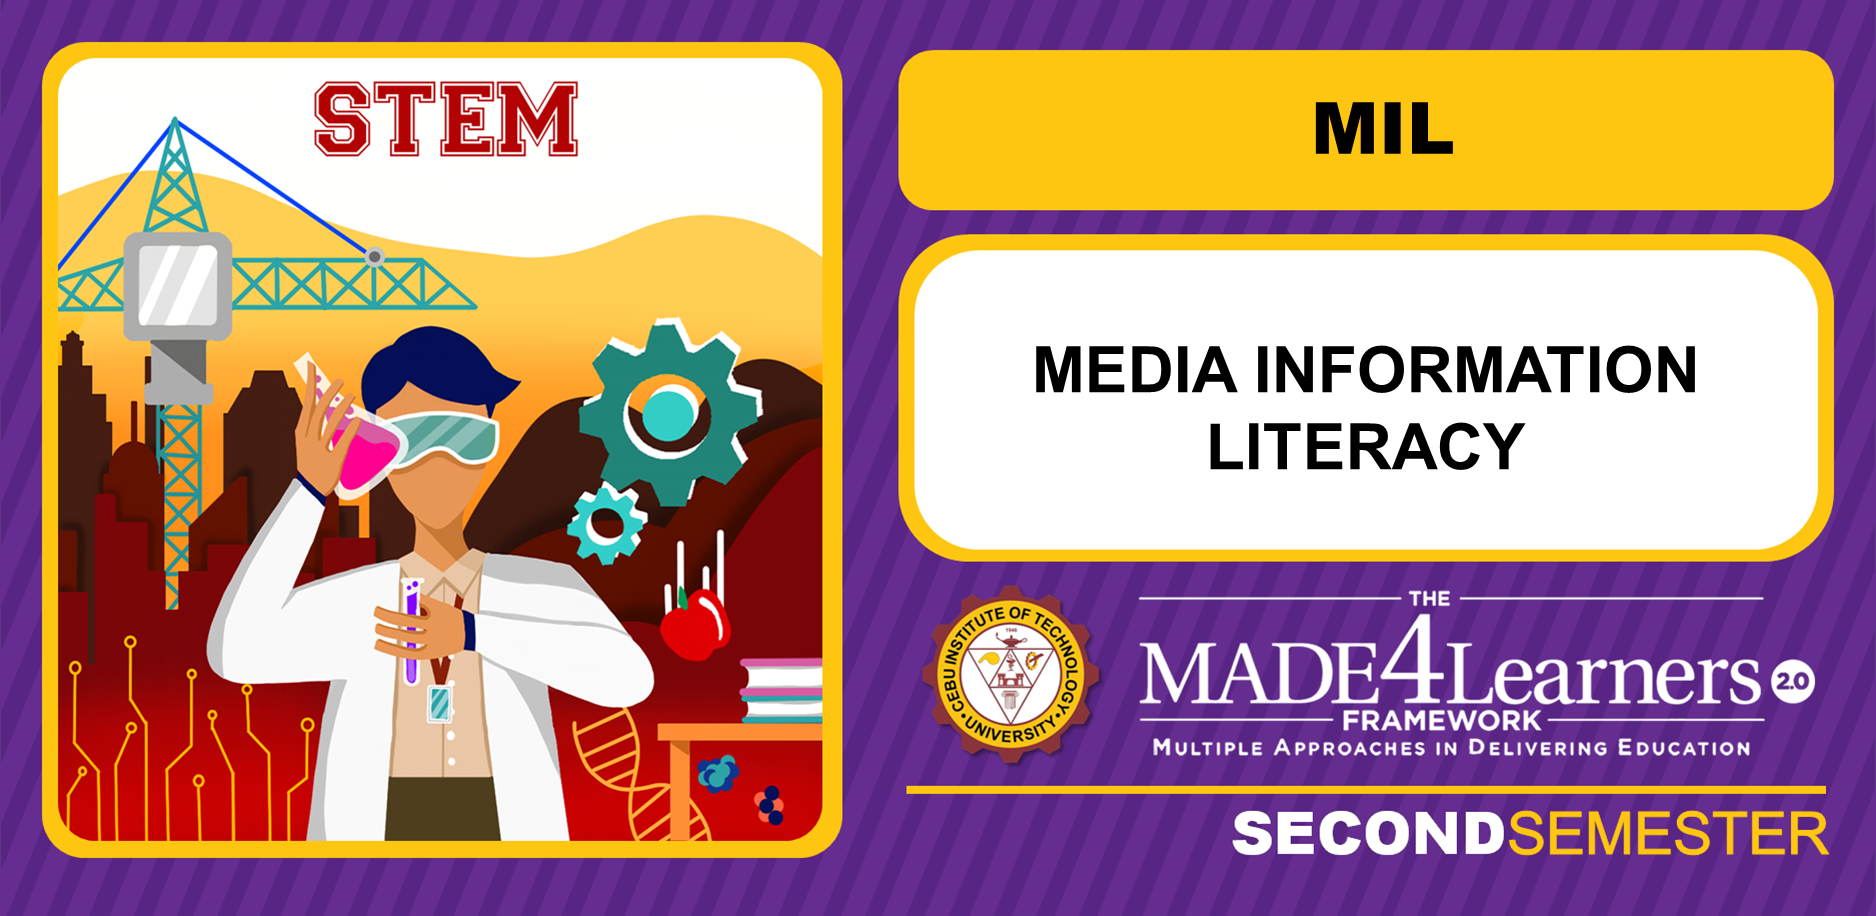 MIL: Media Information Literacy (Martinez)